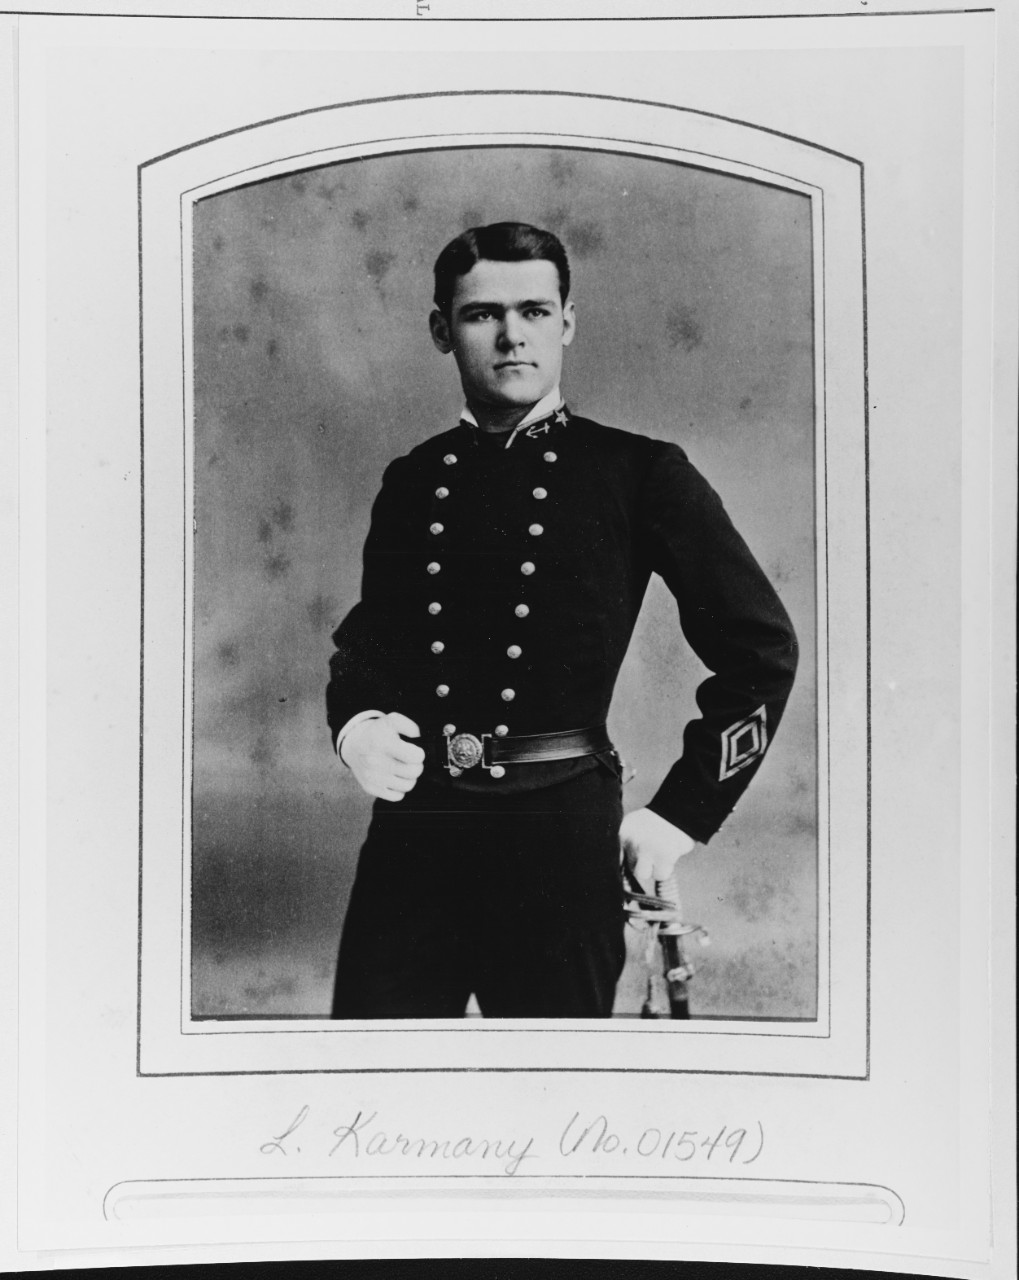 Colonel Lincoln Karmany, USMC